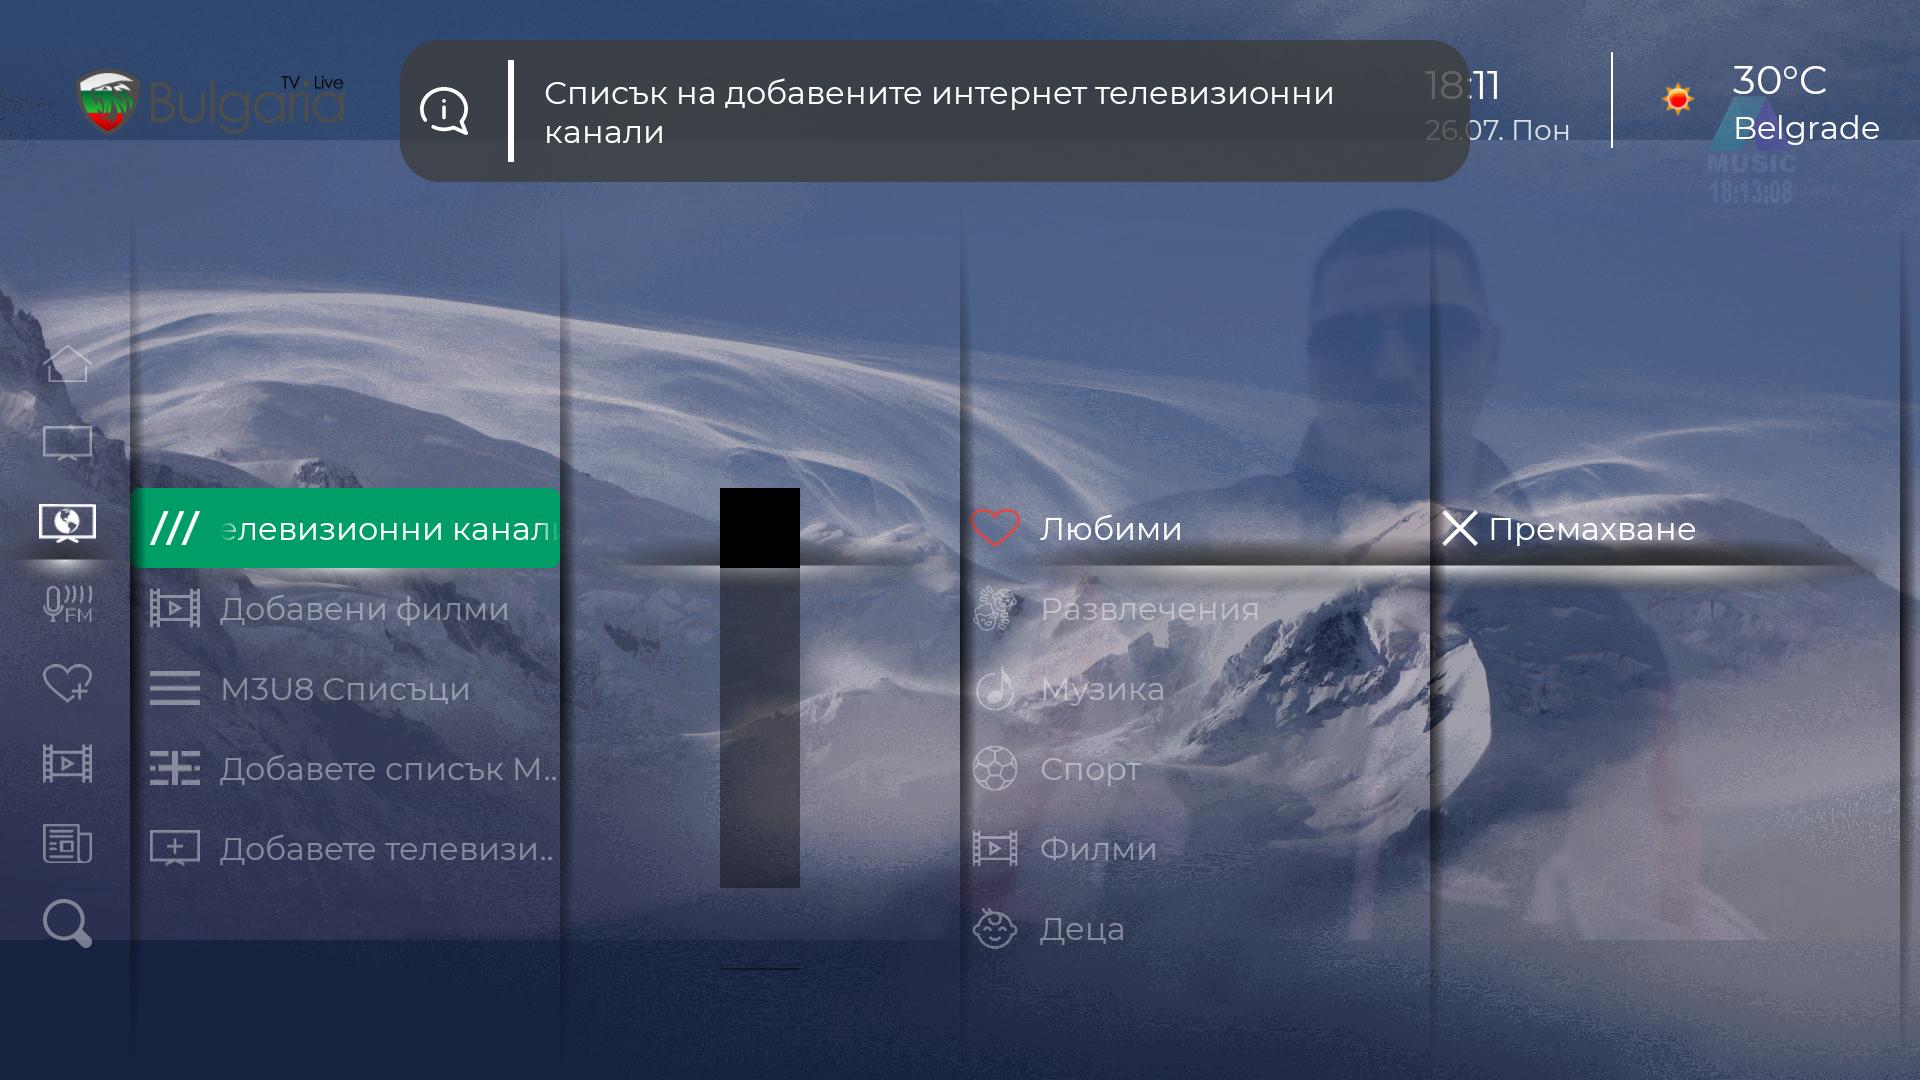 Bulgaria Live 1.2.04 Screenshot 4